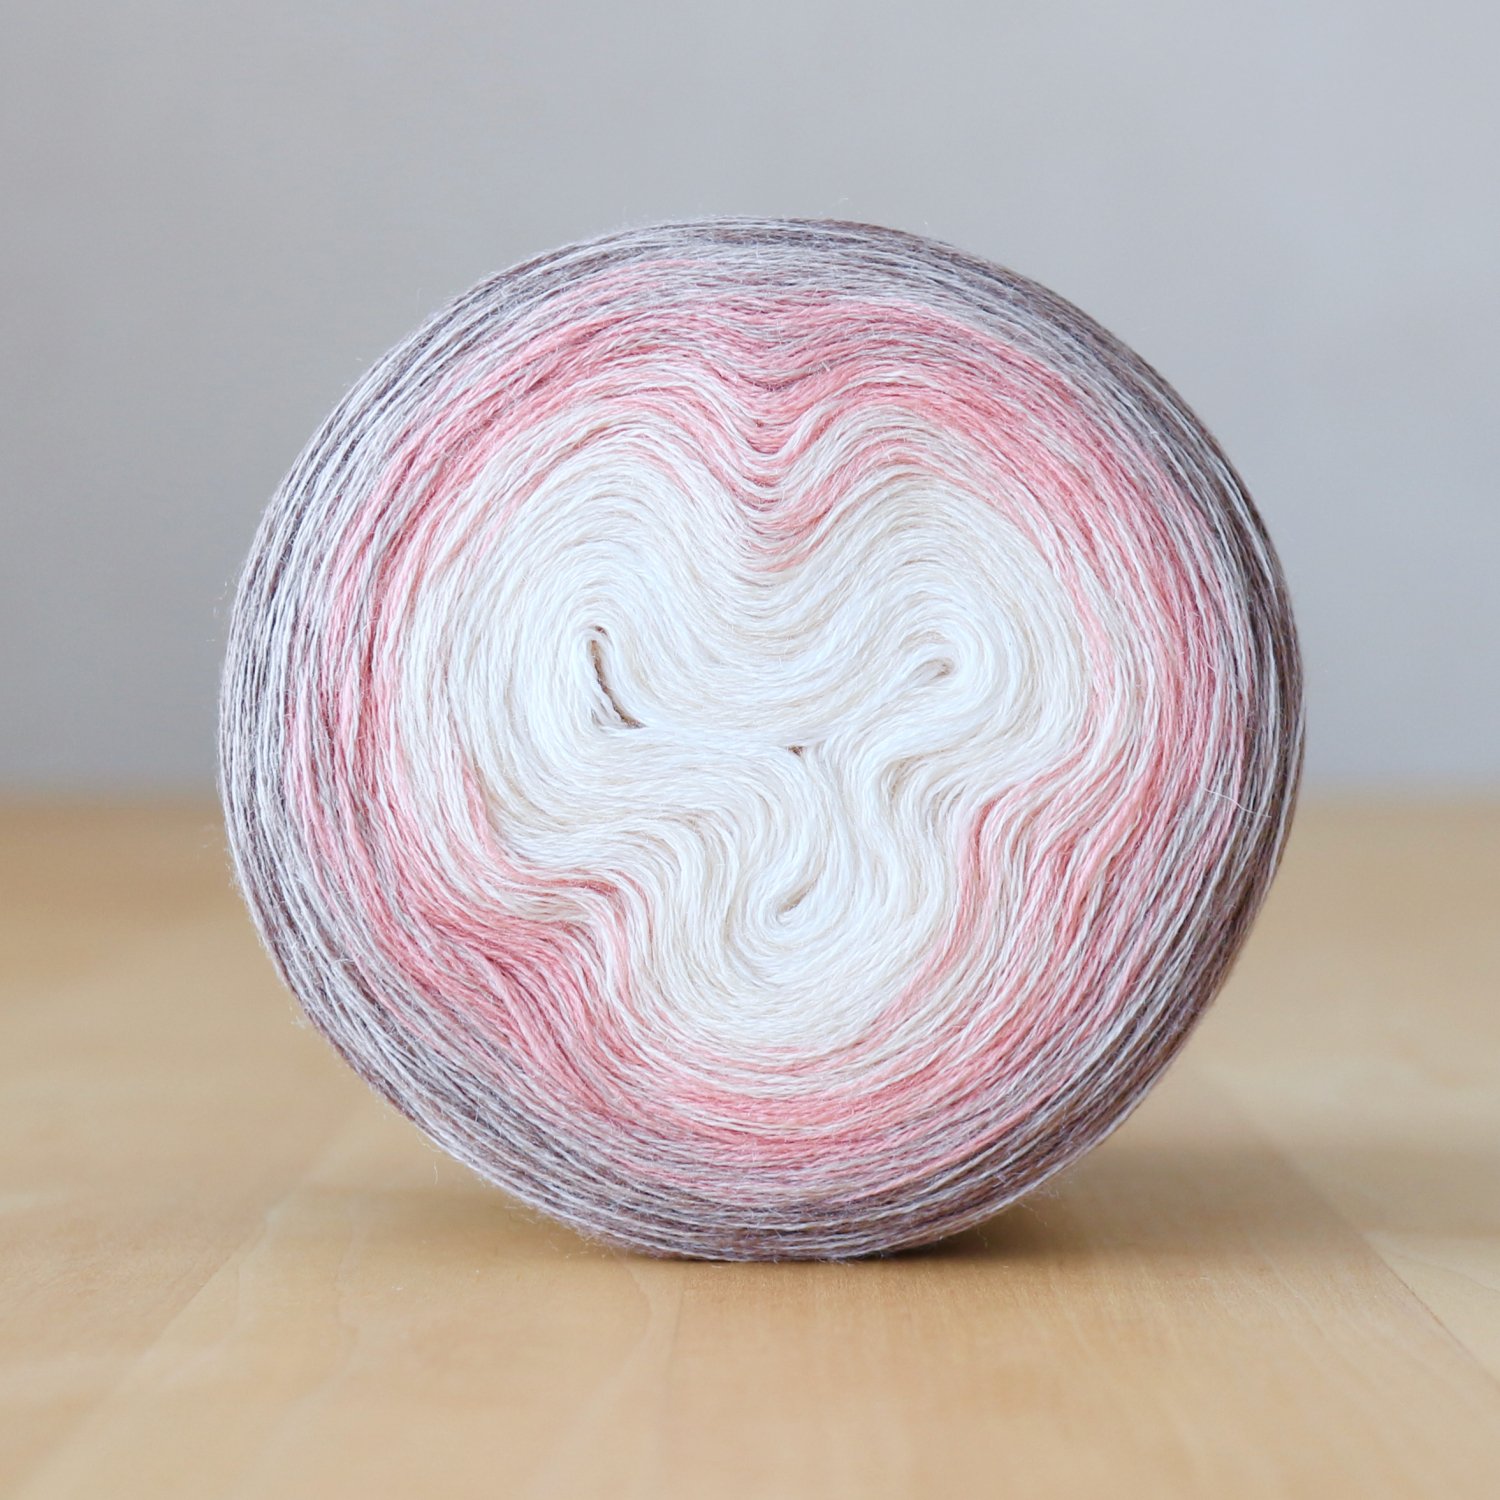 Jolly knits<br>Gradient Yarn Merino 3PLY1000m<br>DESERT ROSE